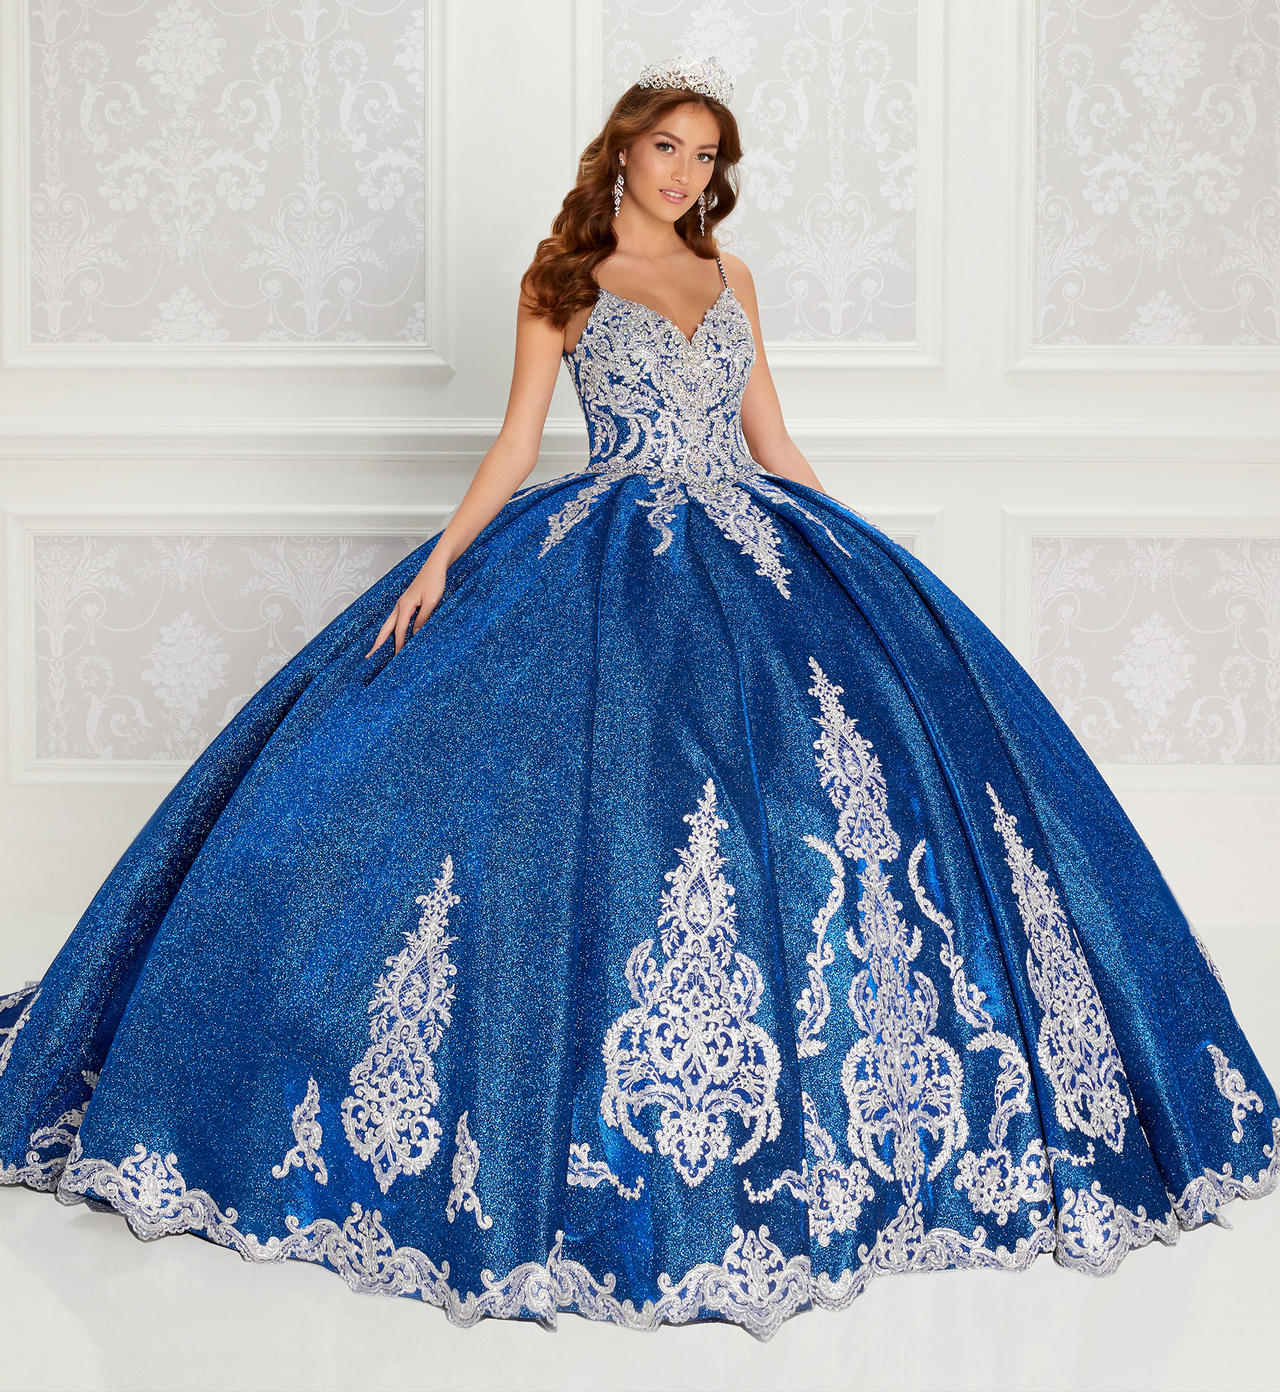 Sapphire blue princess dress by kaelynturtle350 on DeviantArt